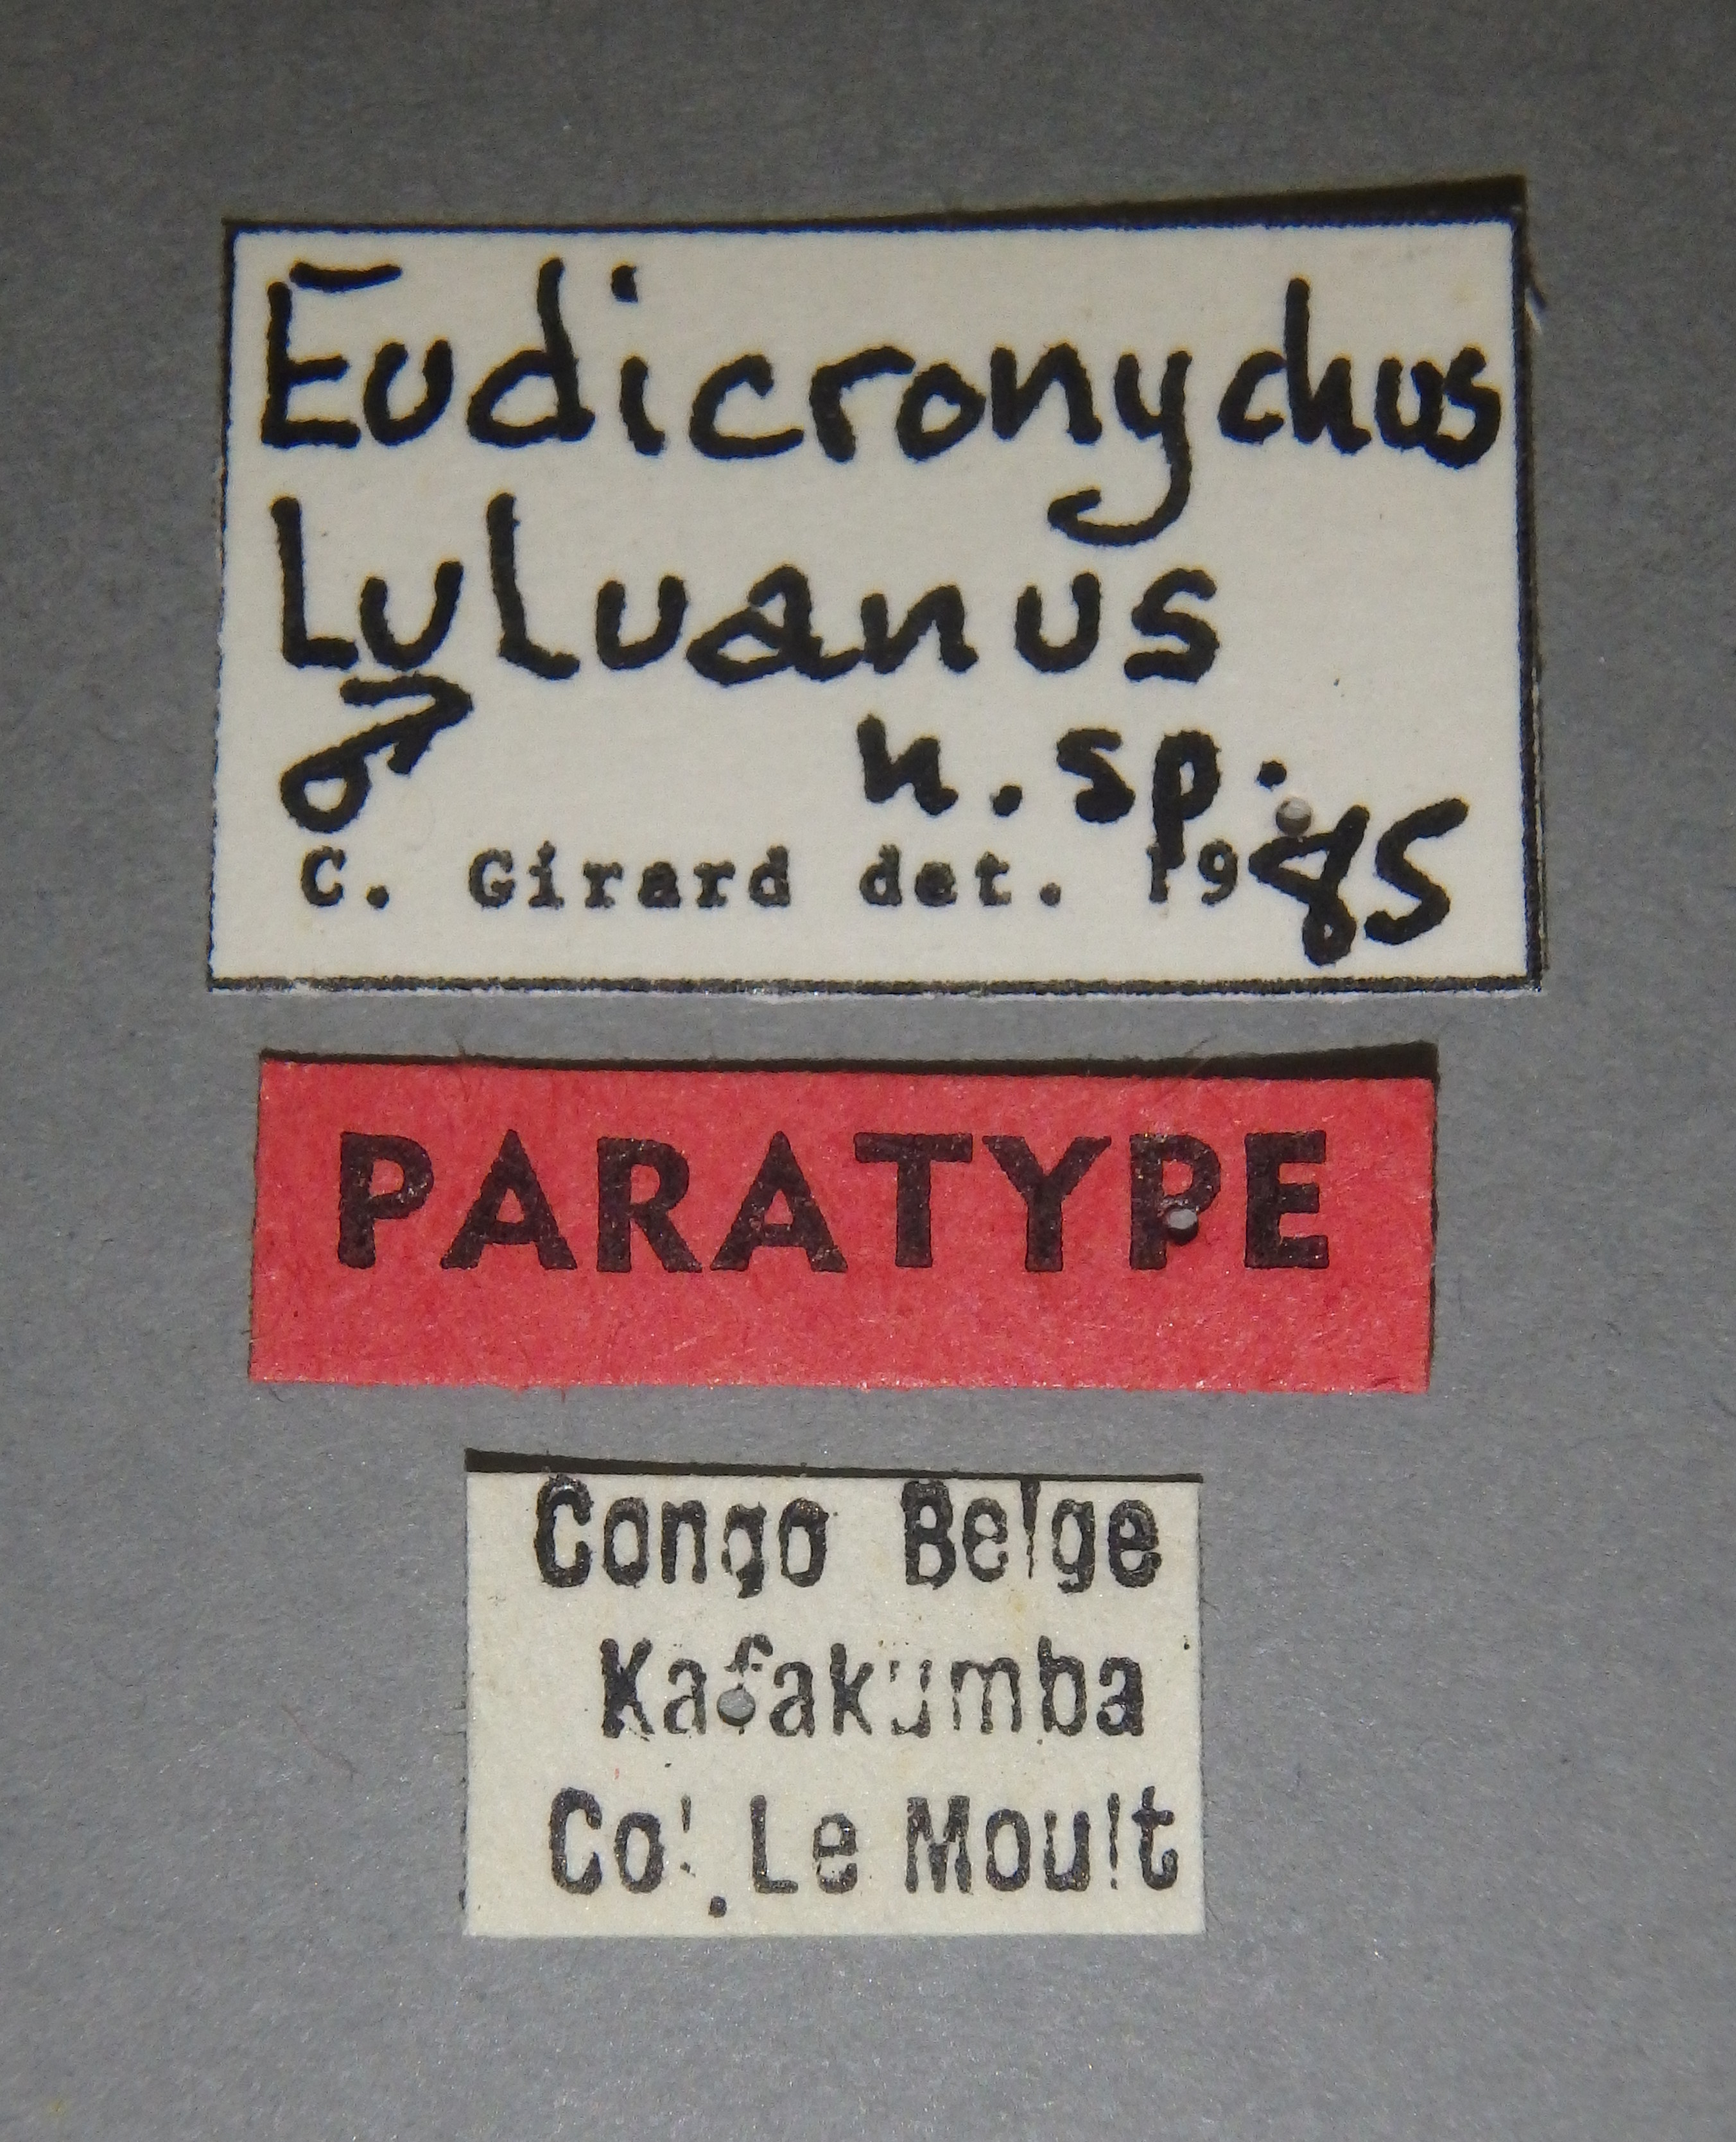 Eudicronychus luluanus pt M Lb.jpg